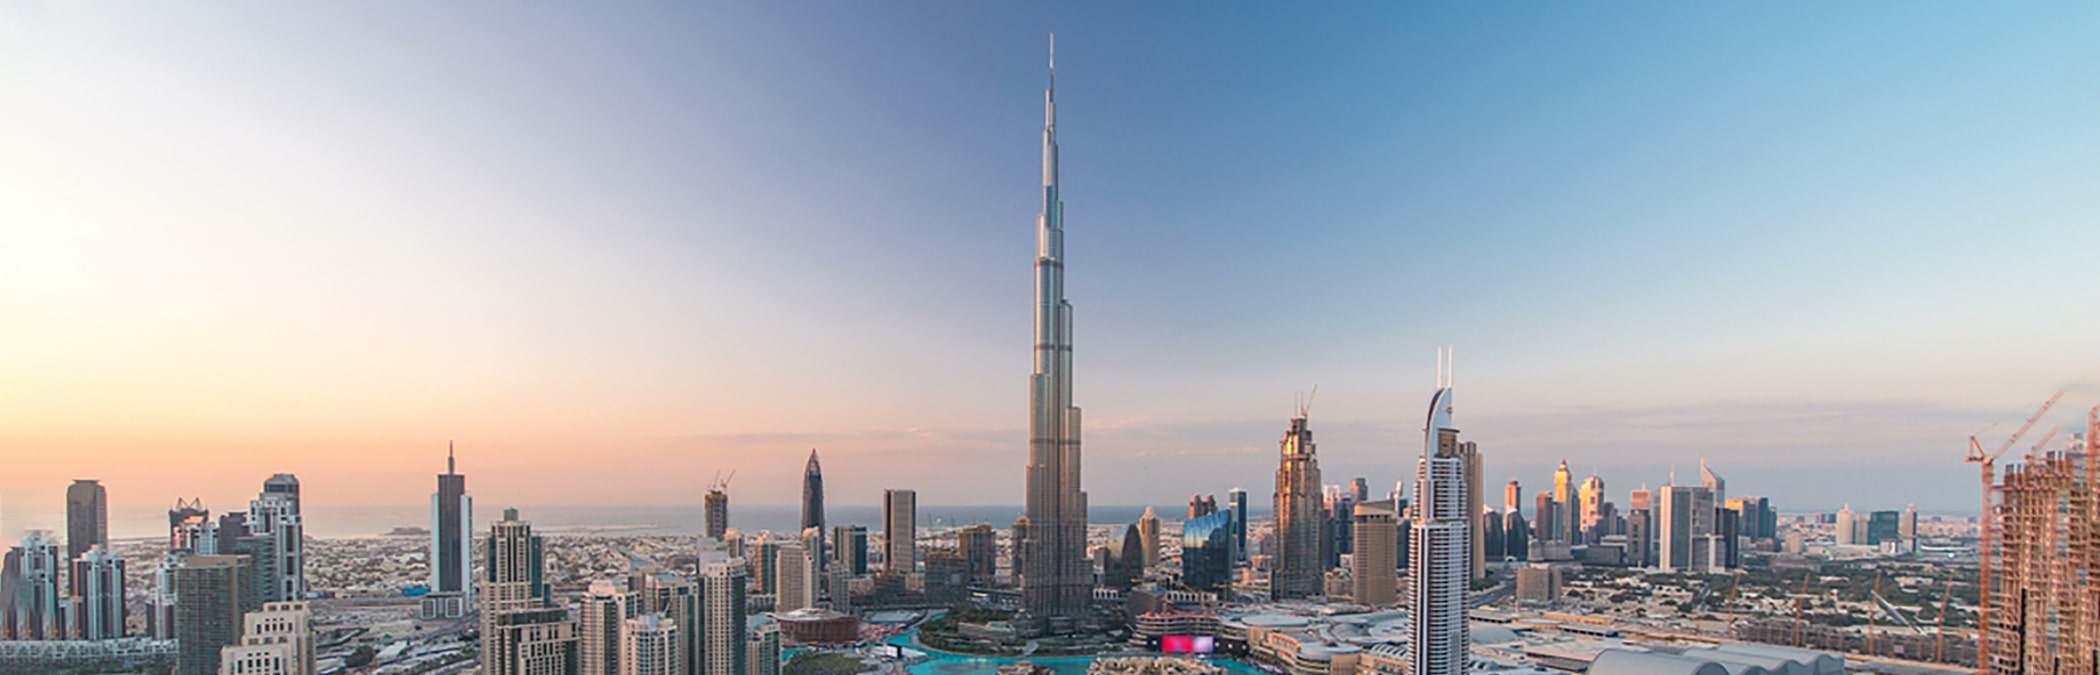 Burj Khalifa, Dubai - Book Tickets & Tours | GetYourGuide